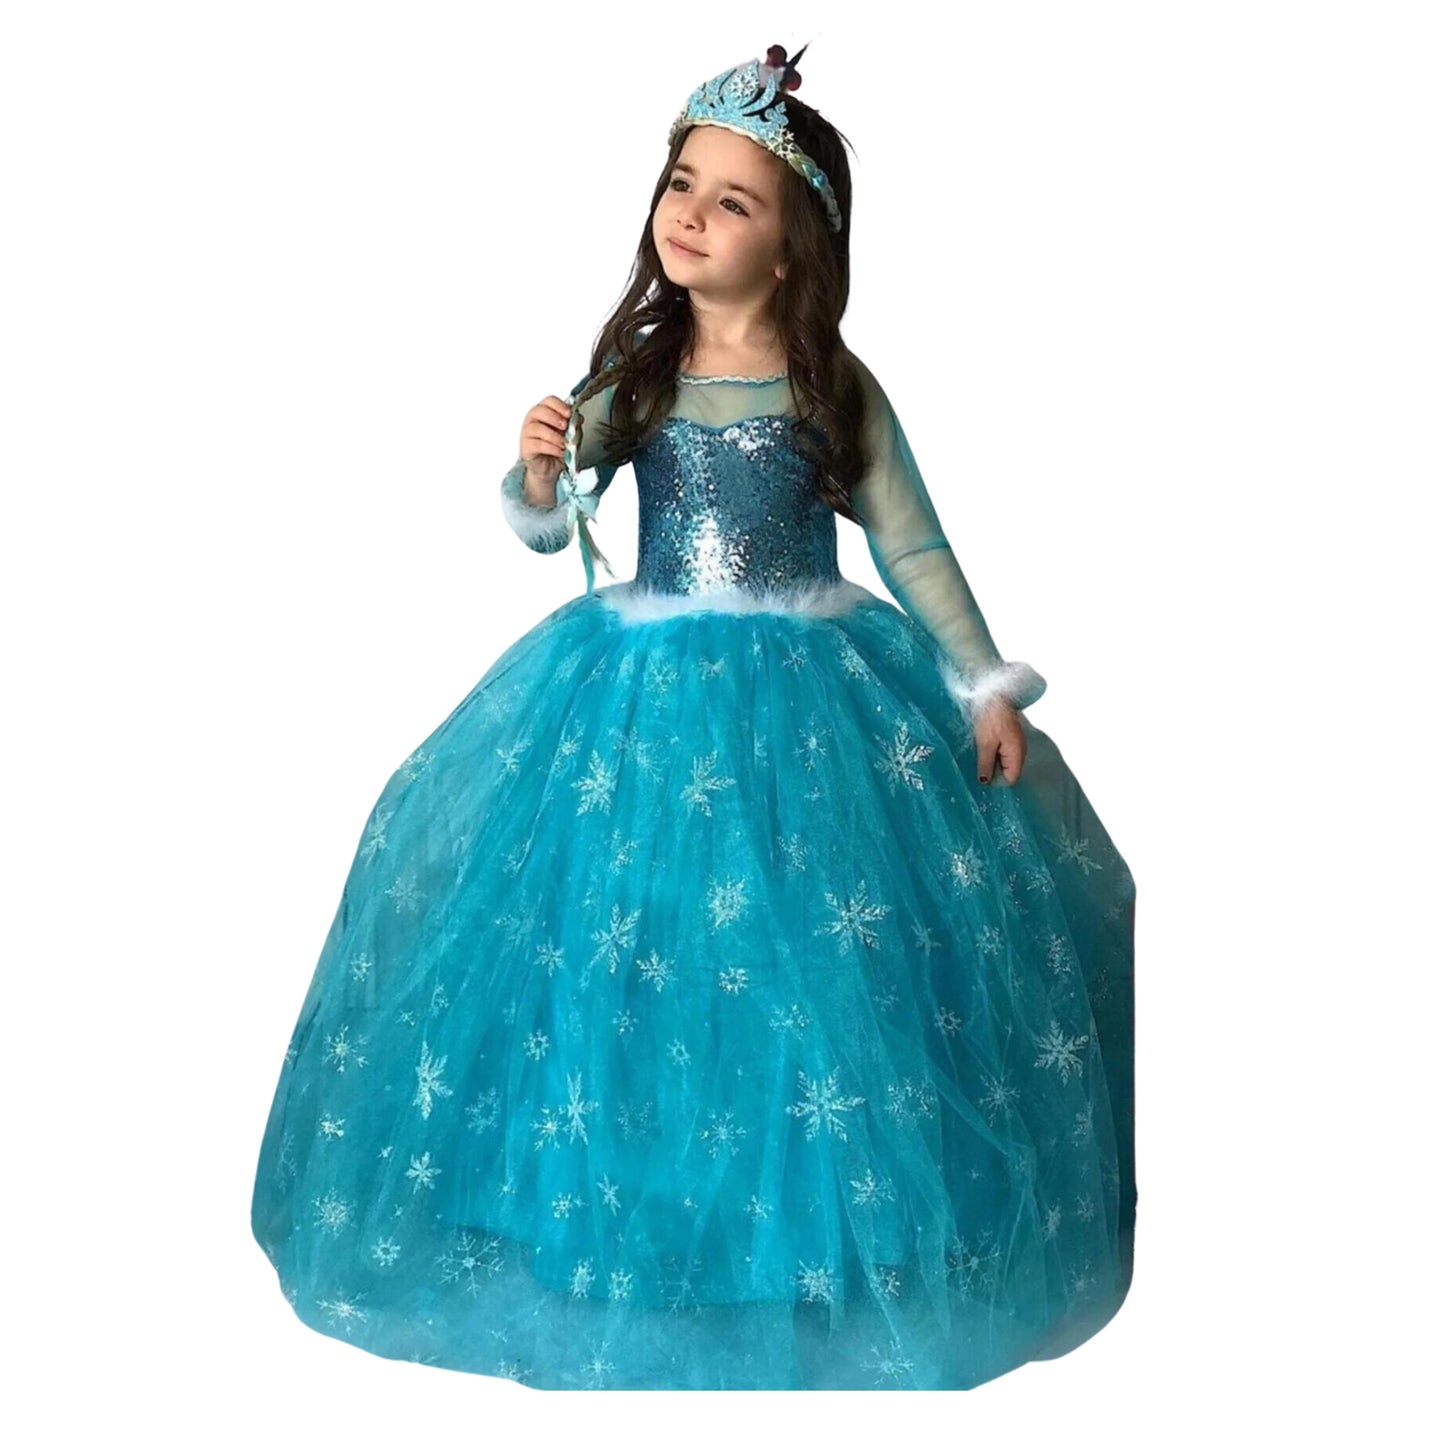 KidsKiddy™ - Girls Frozen Elsa Costume